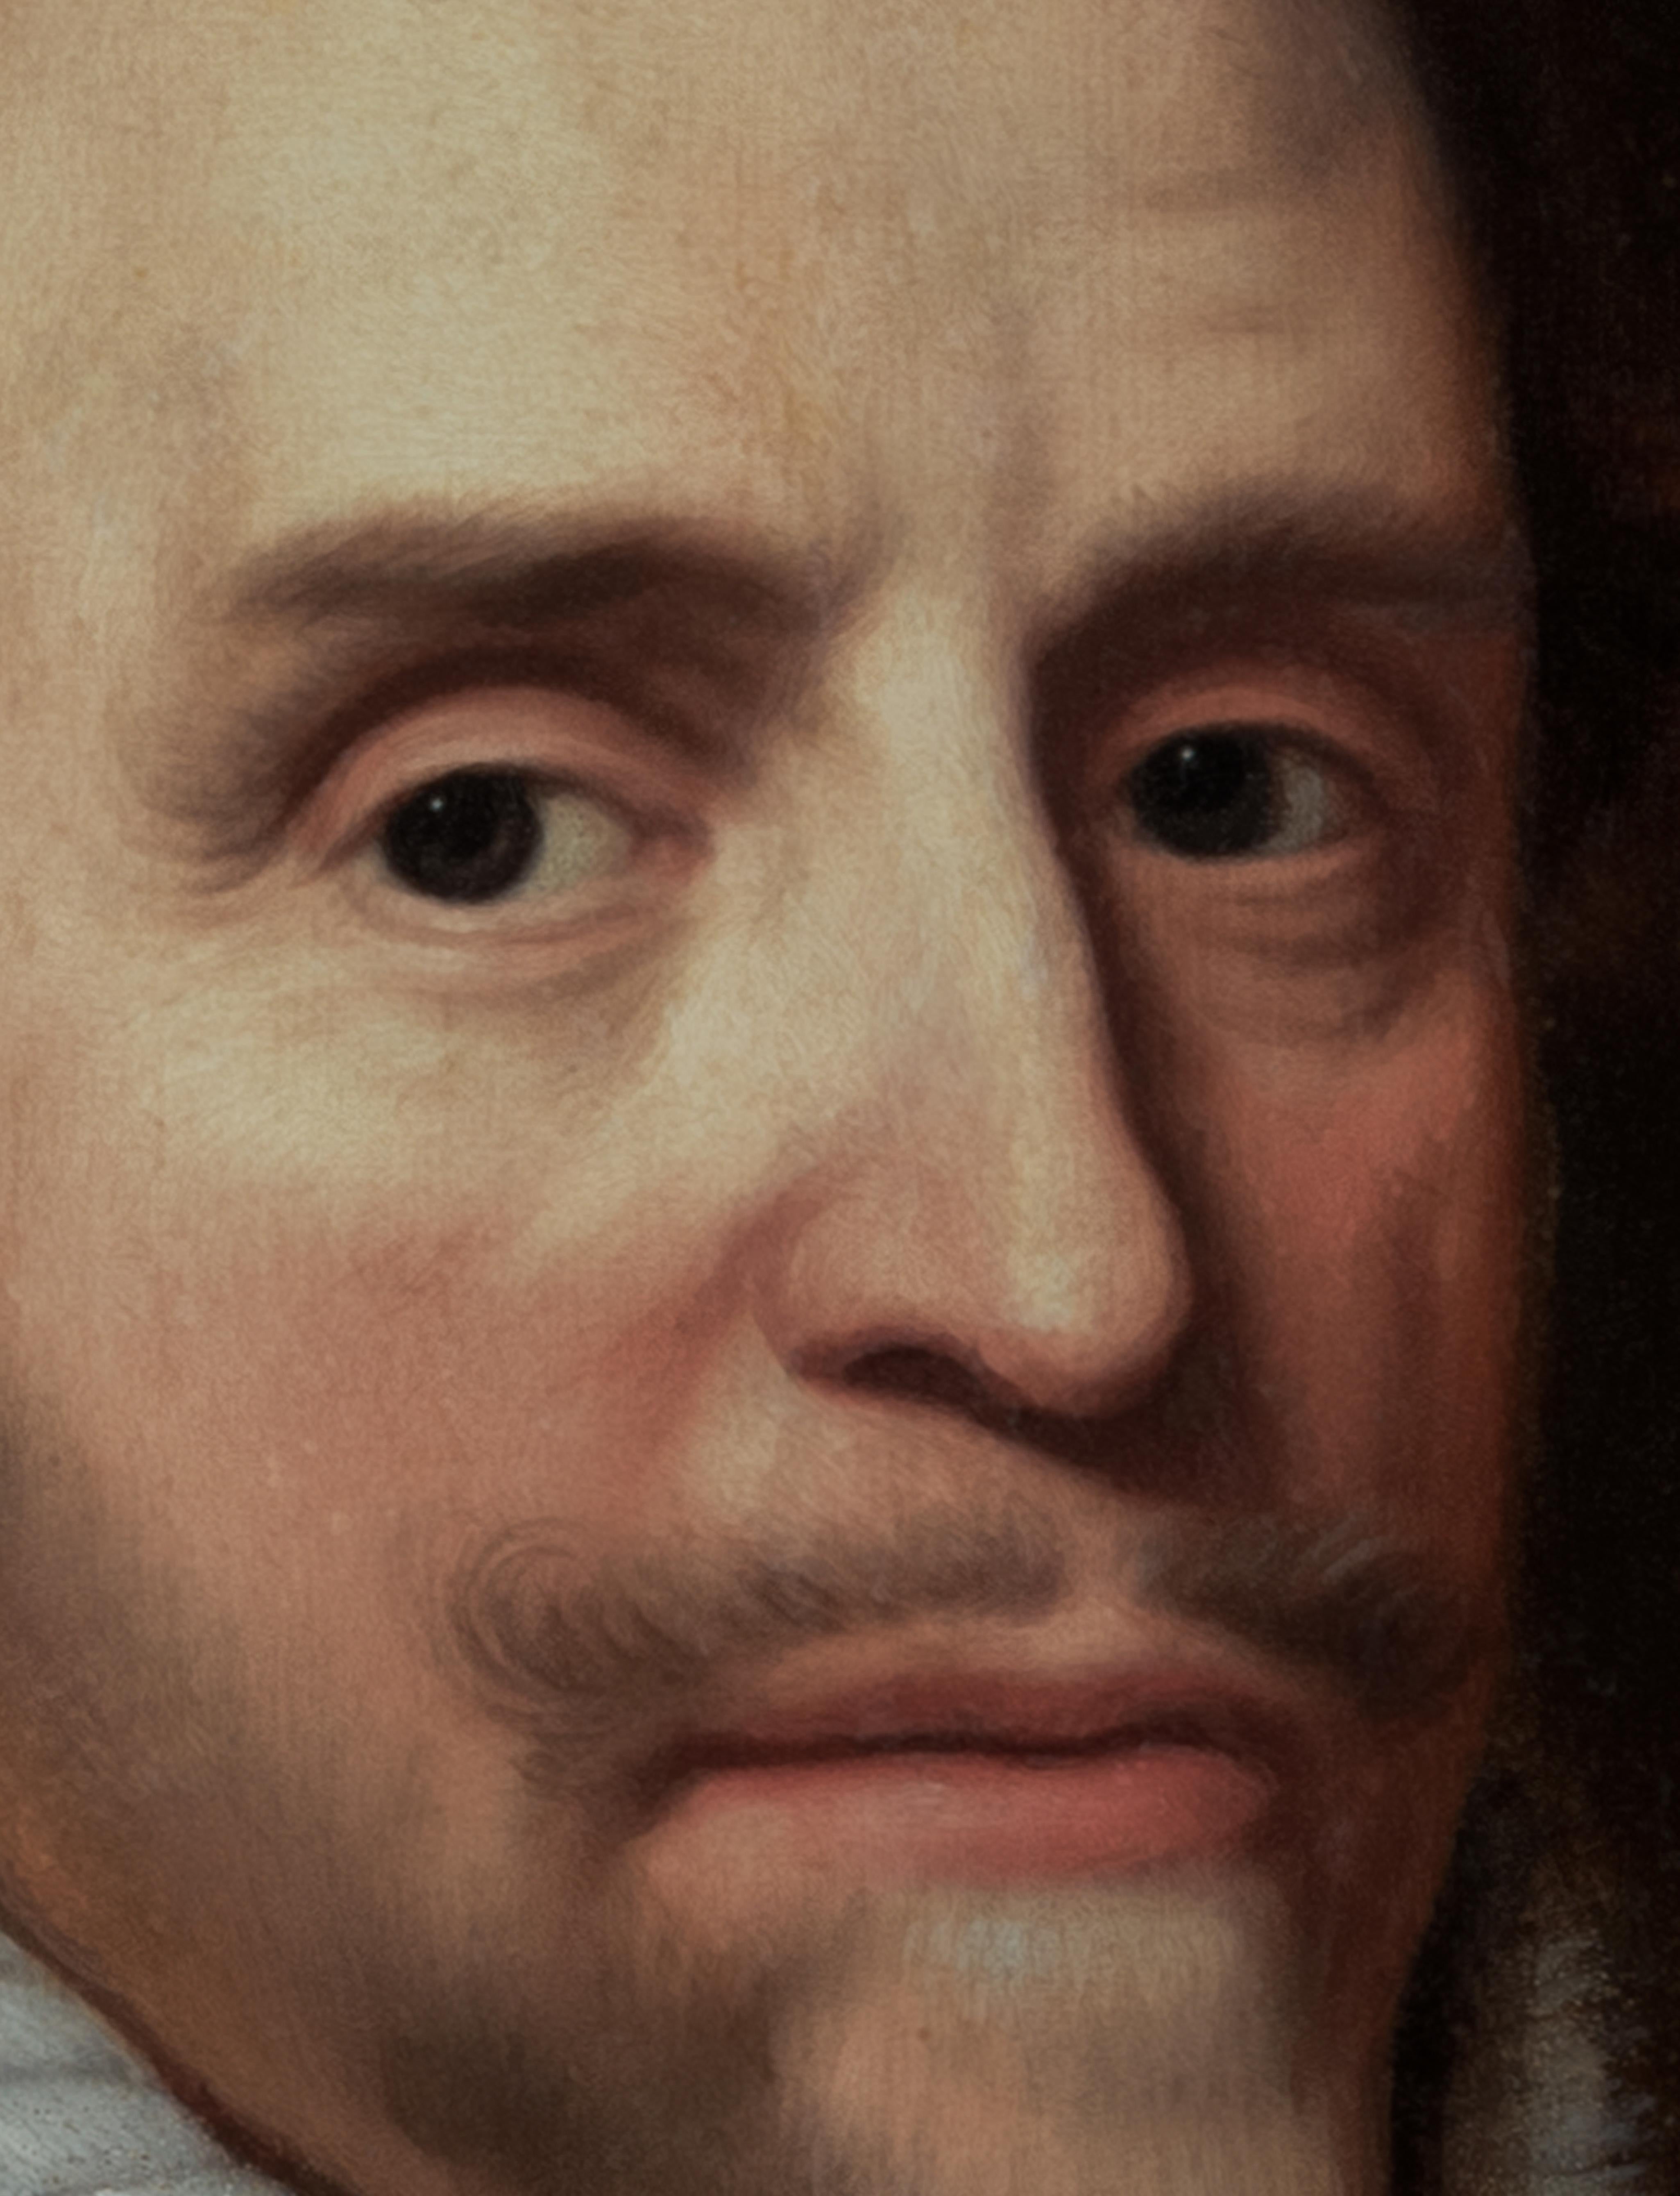 Dutch Old Master Portrait of Maurits, Prince of Orange-Nassau, Oil on Panel  For Sale 2